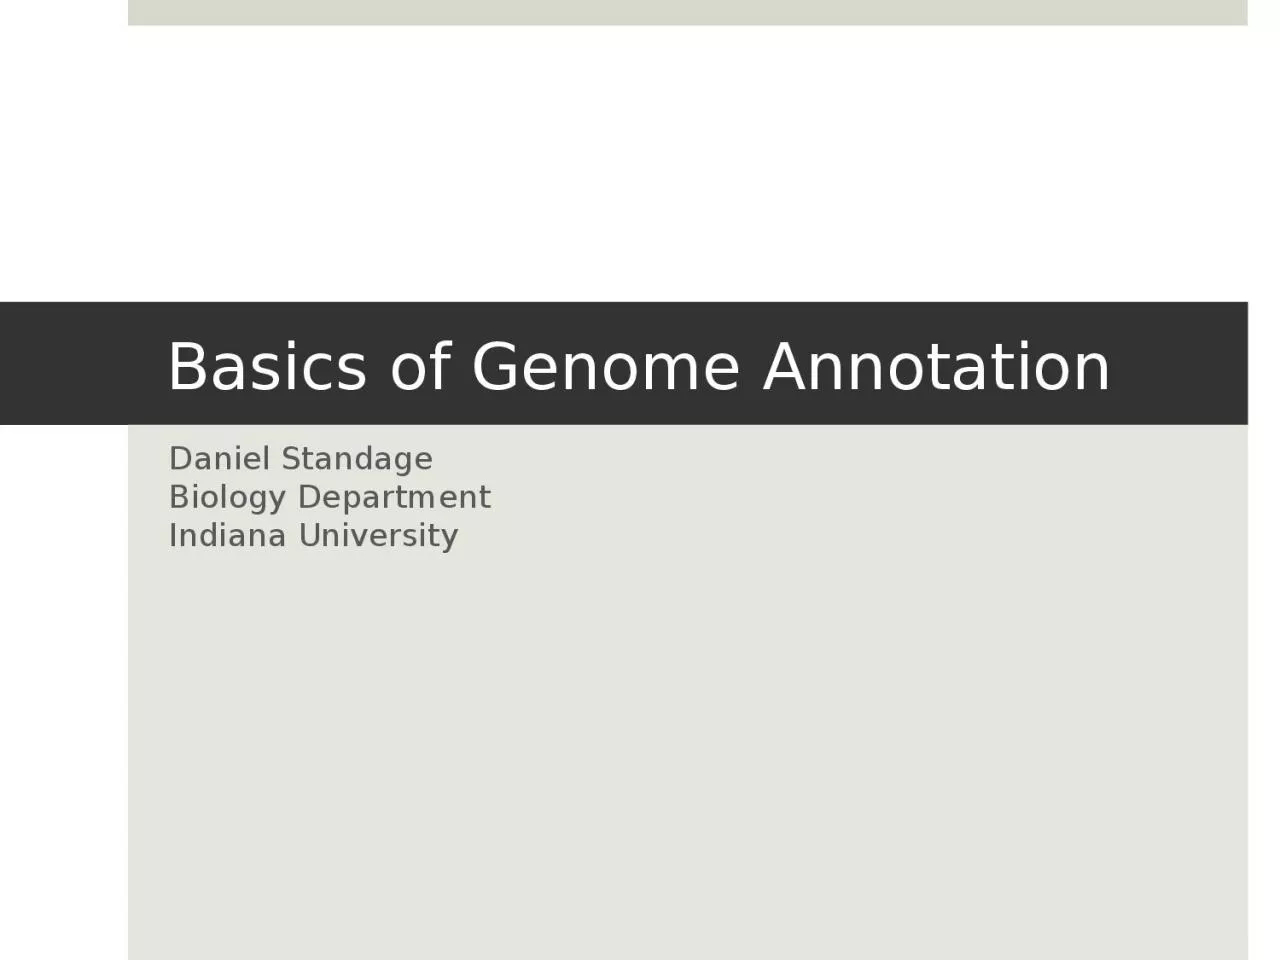 Basics of Genome Annotation